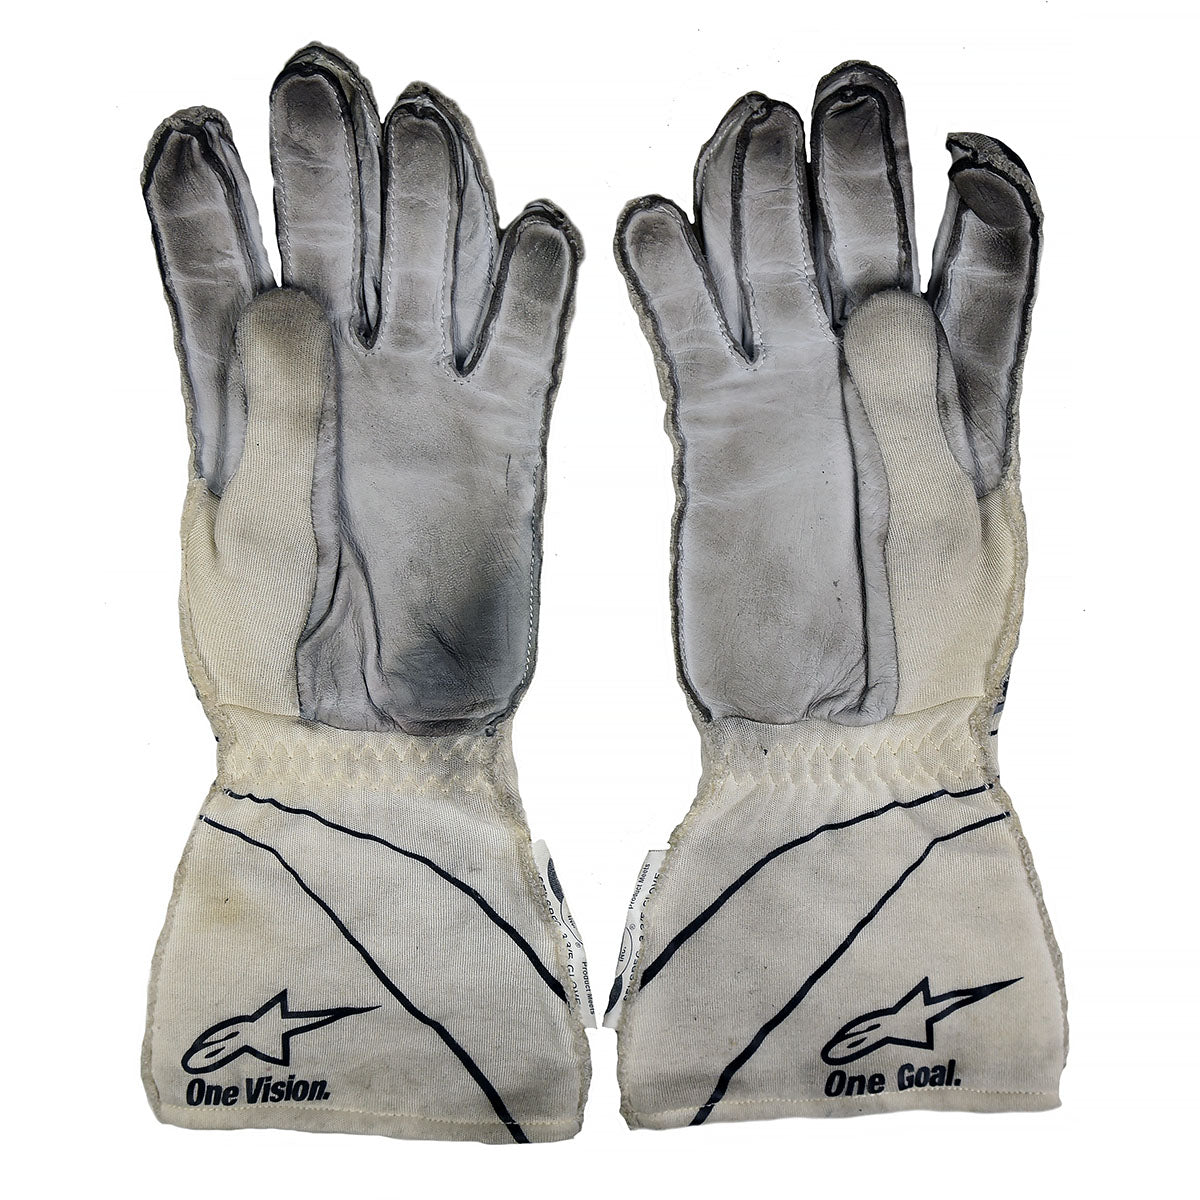 2018 Scott Dixon Signed Race Used Championship Winning Chip Ganassi Racing IndyCar Gloves